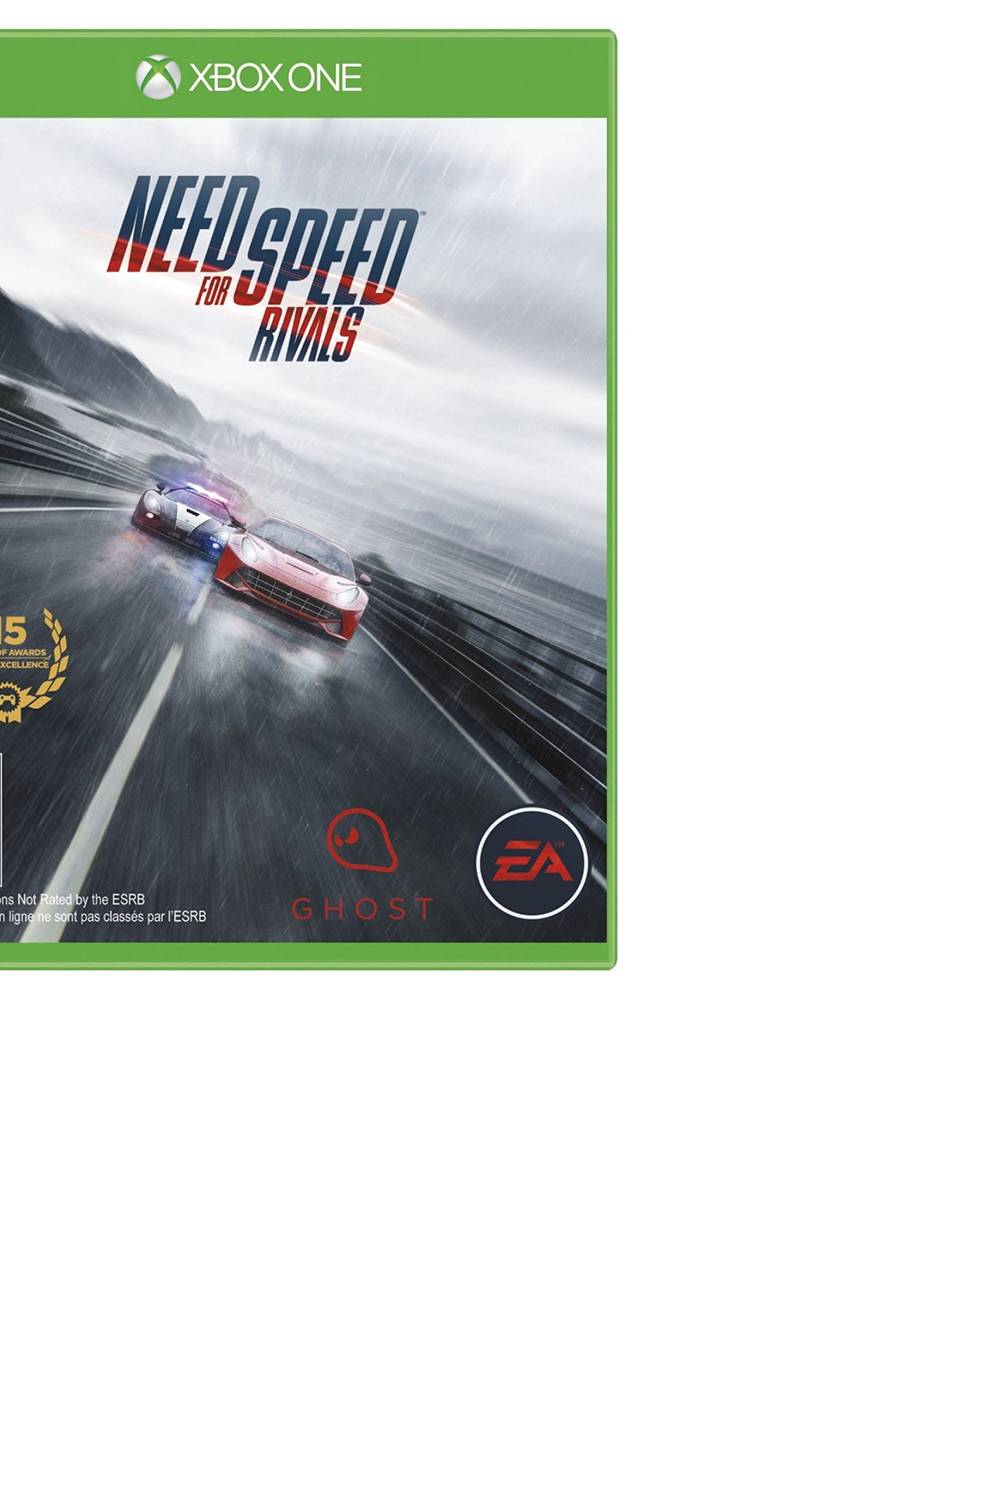 MICROSOFT - Need For Speed Rivals (XONE)